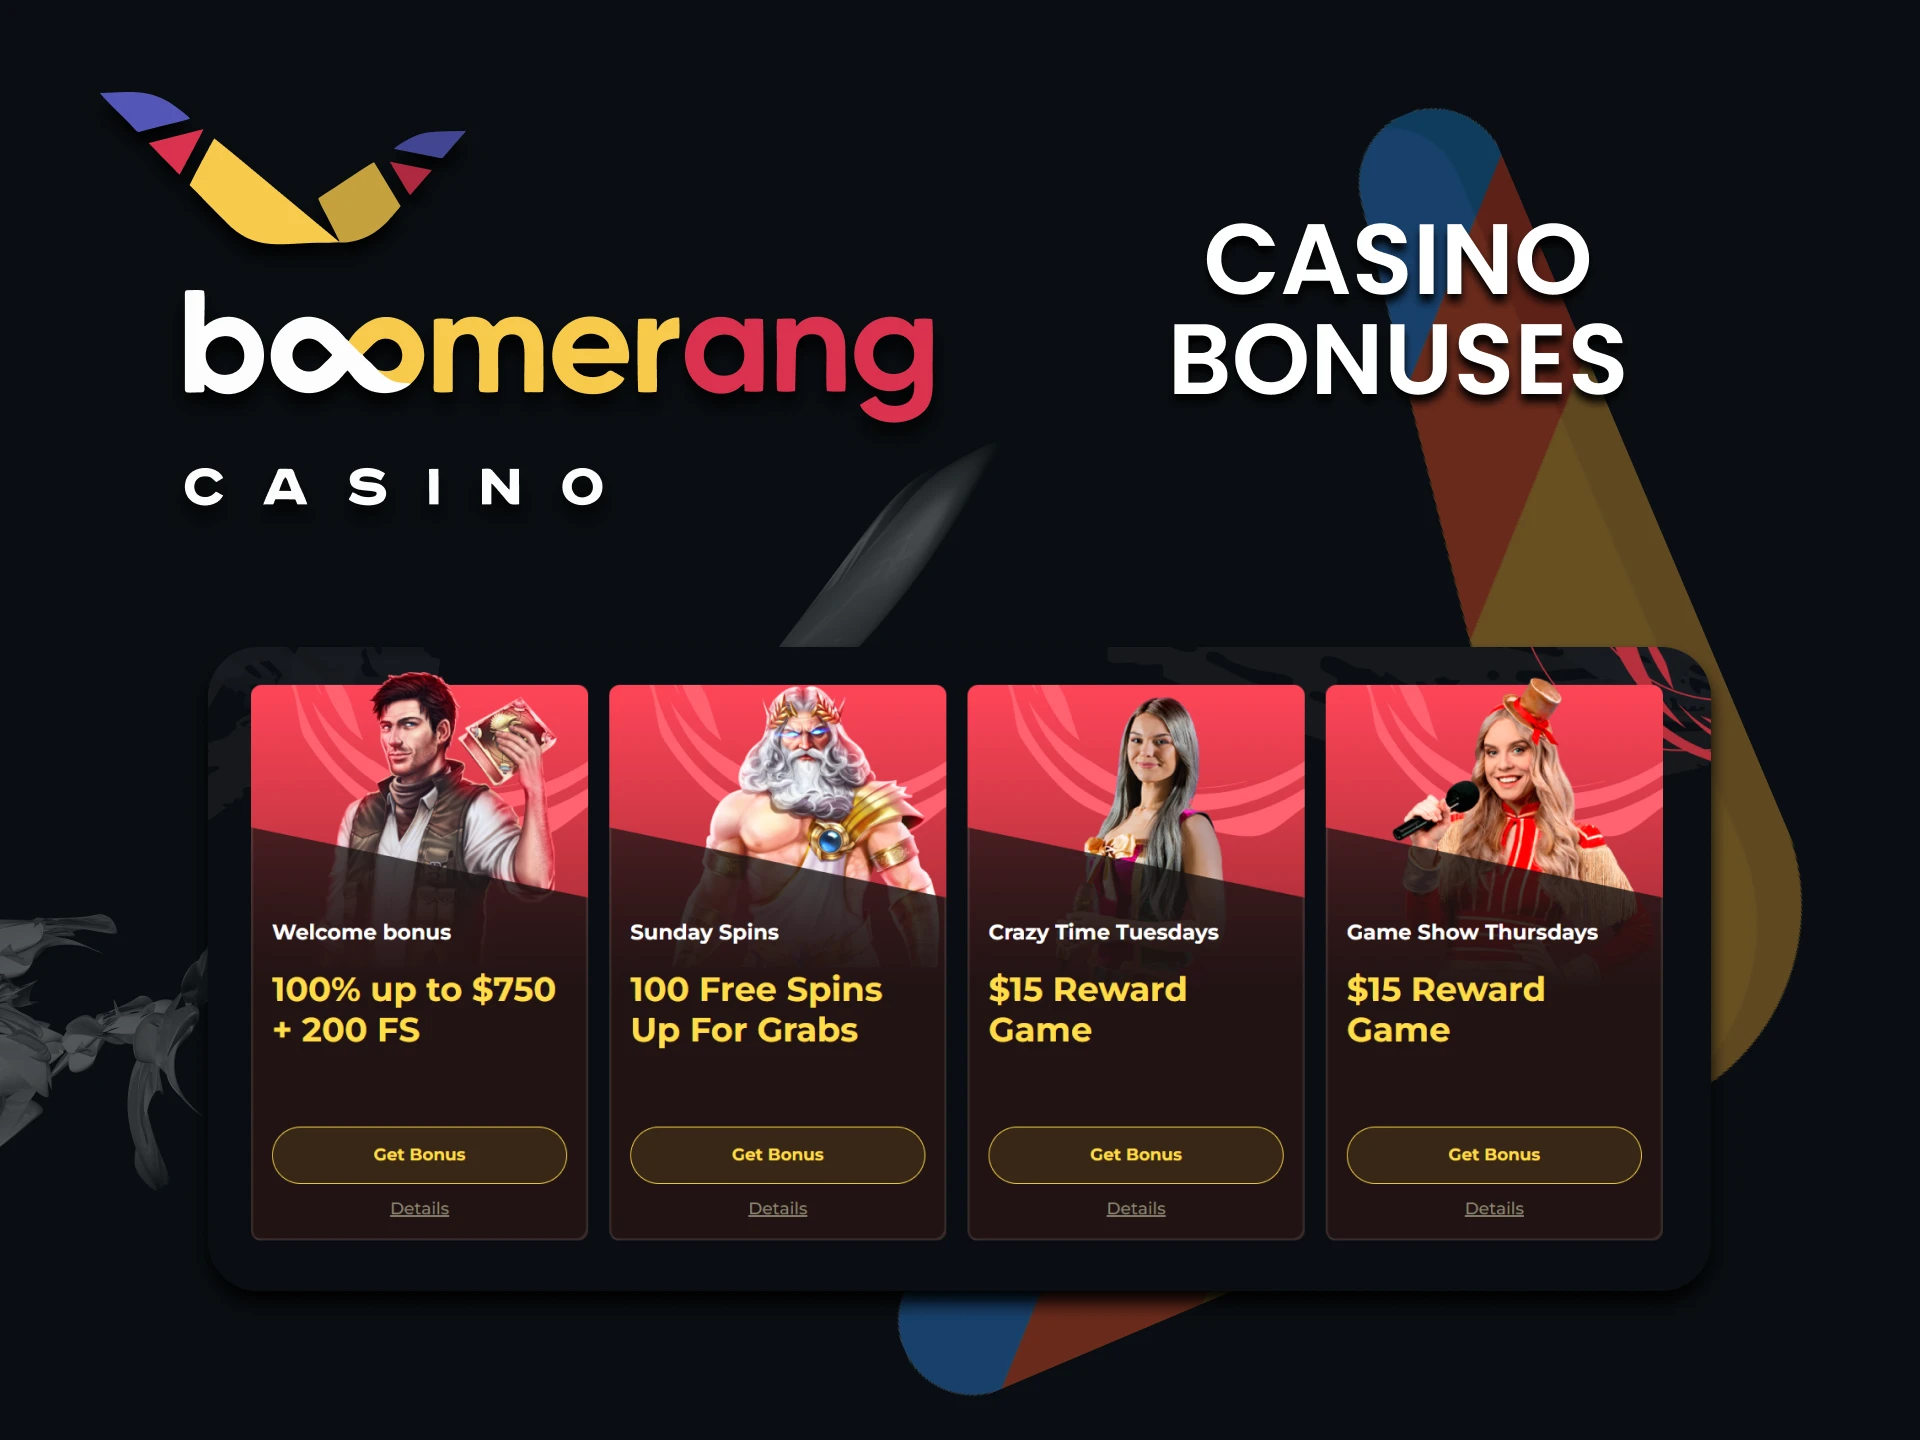 Get a bonus for casino games from Boomerang Casino.